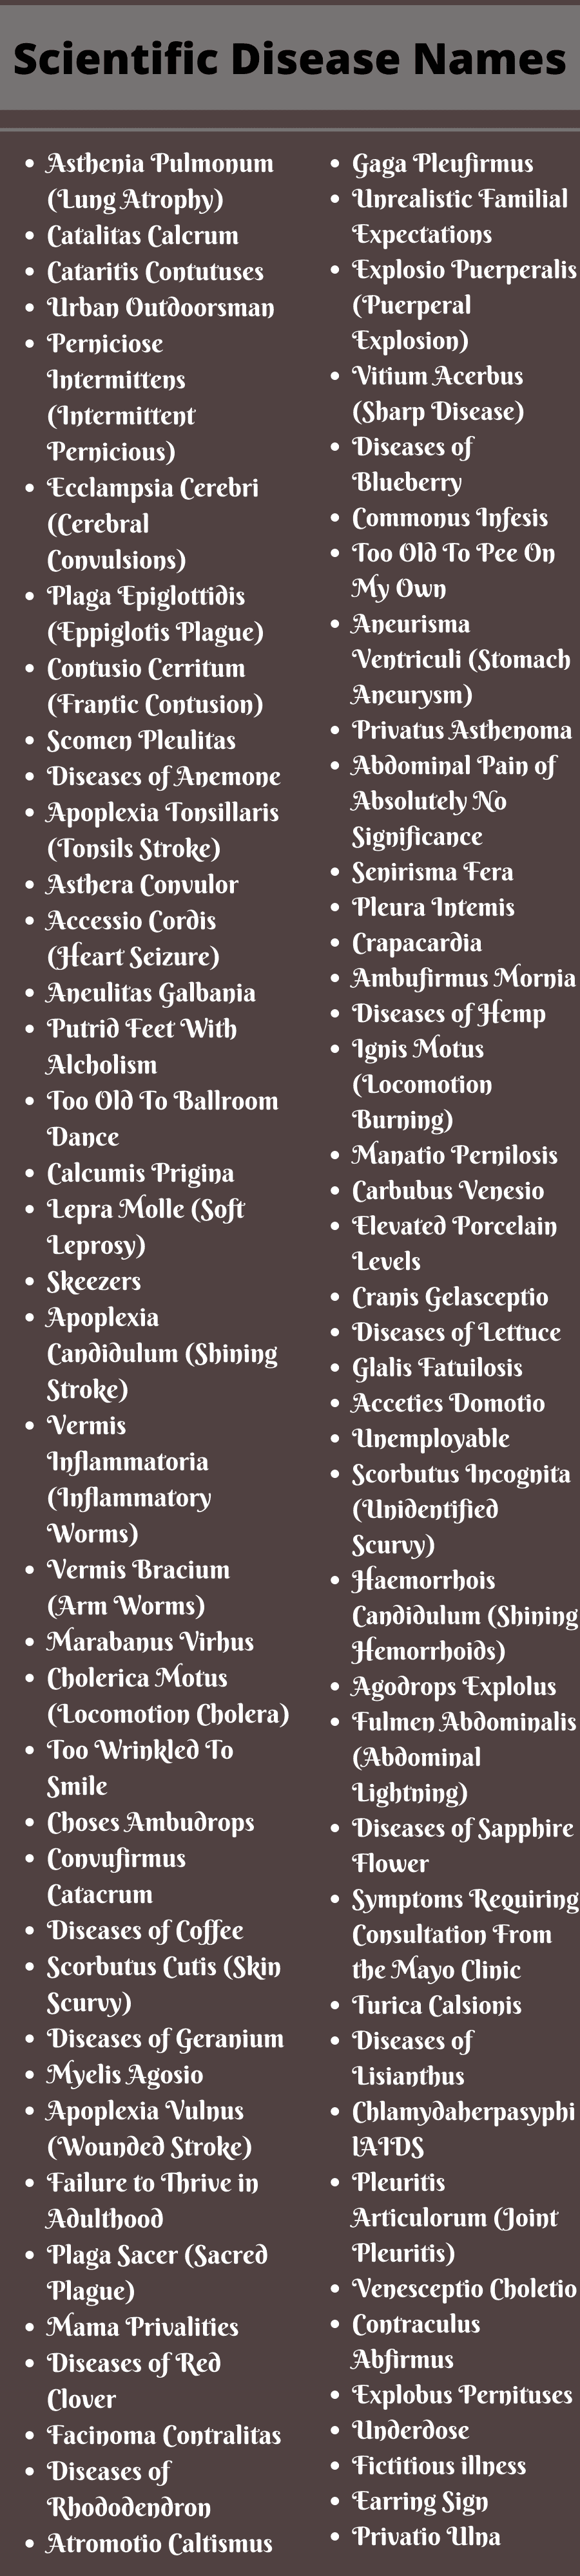 Scientific Disease Names